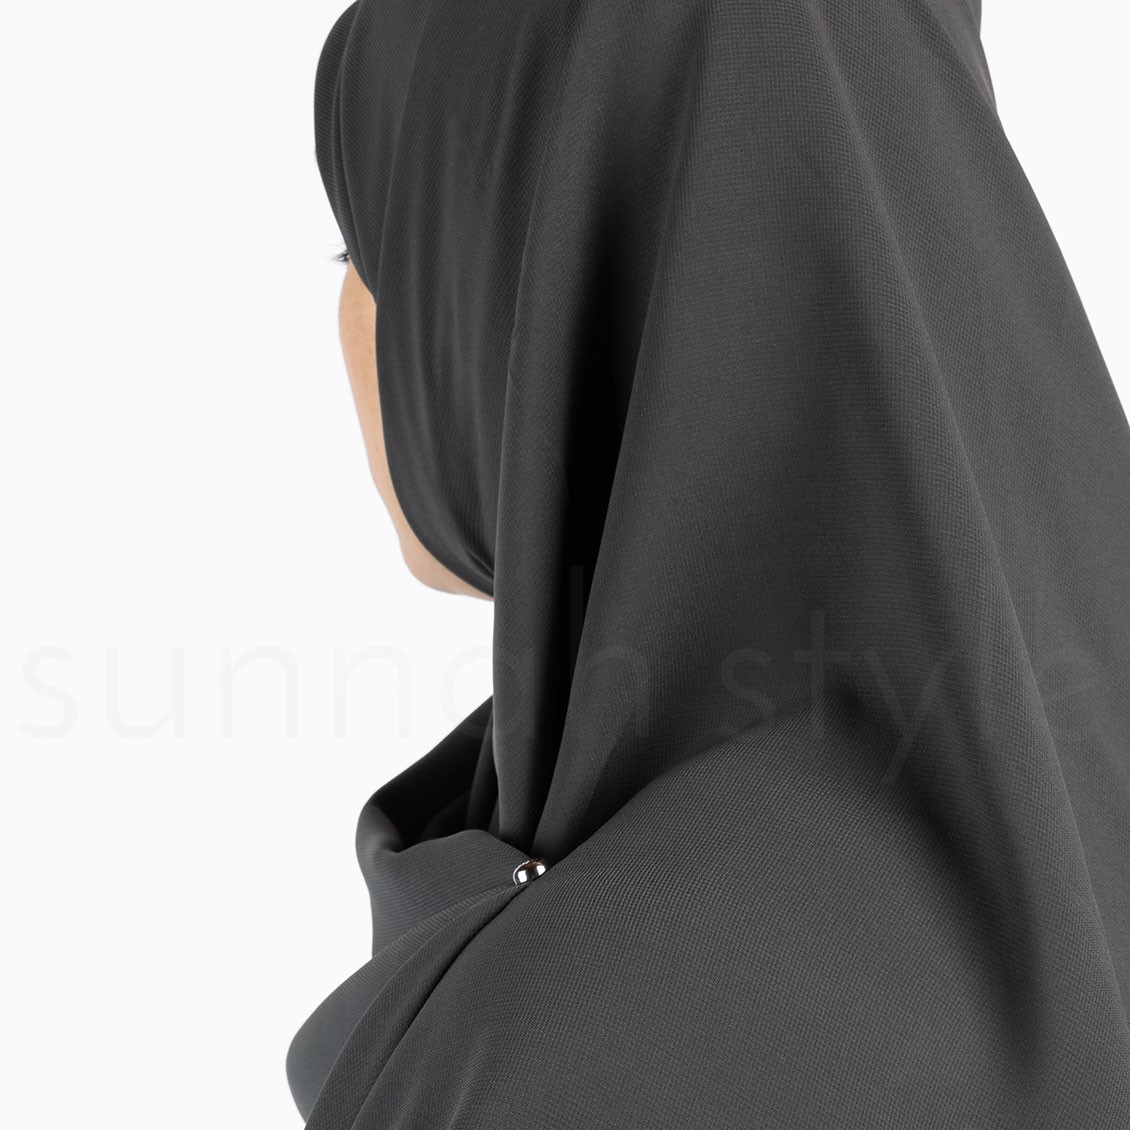 Sunnah Style Essentials Square Hijab XL Dark Grey